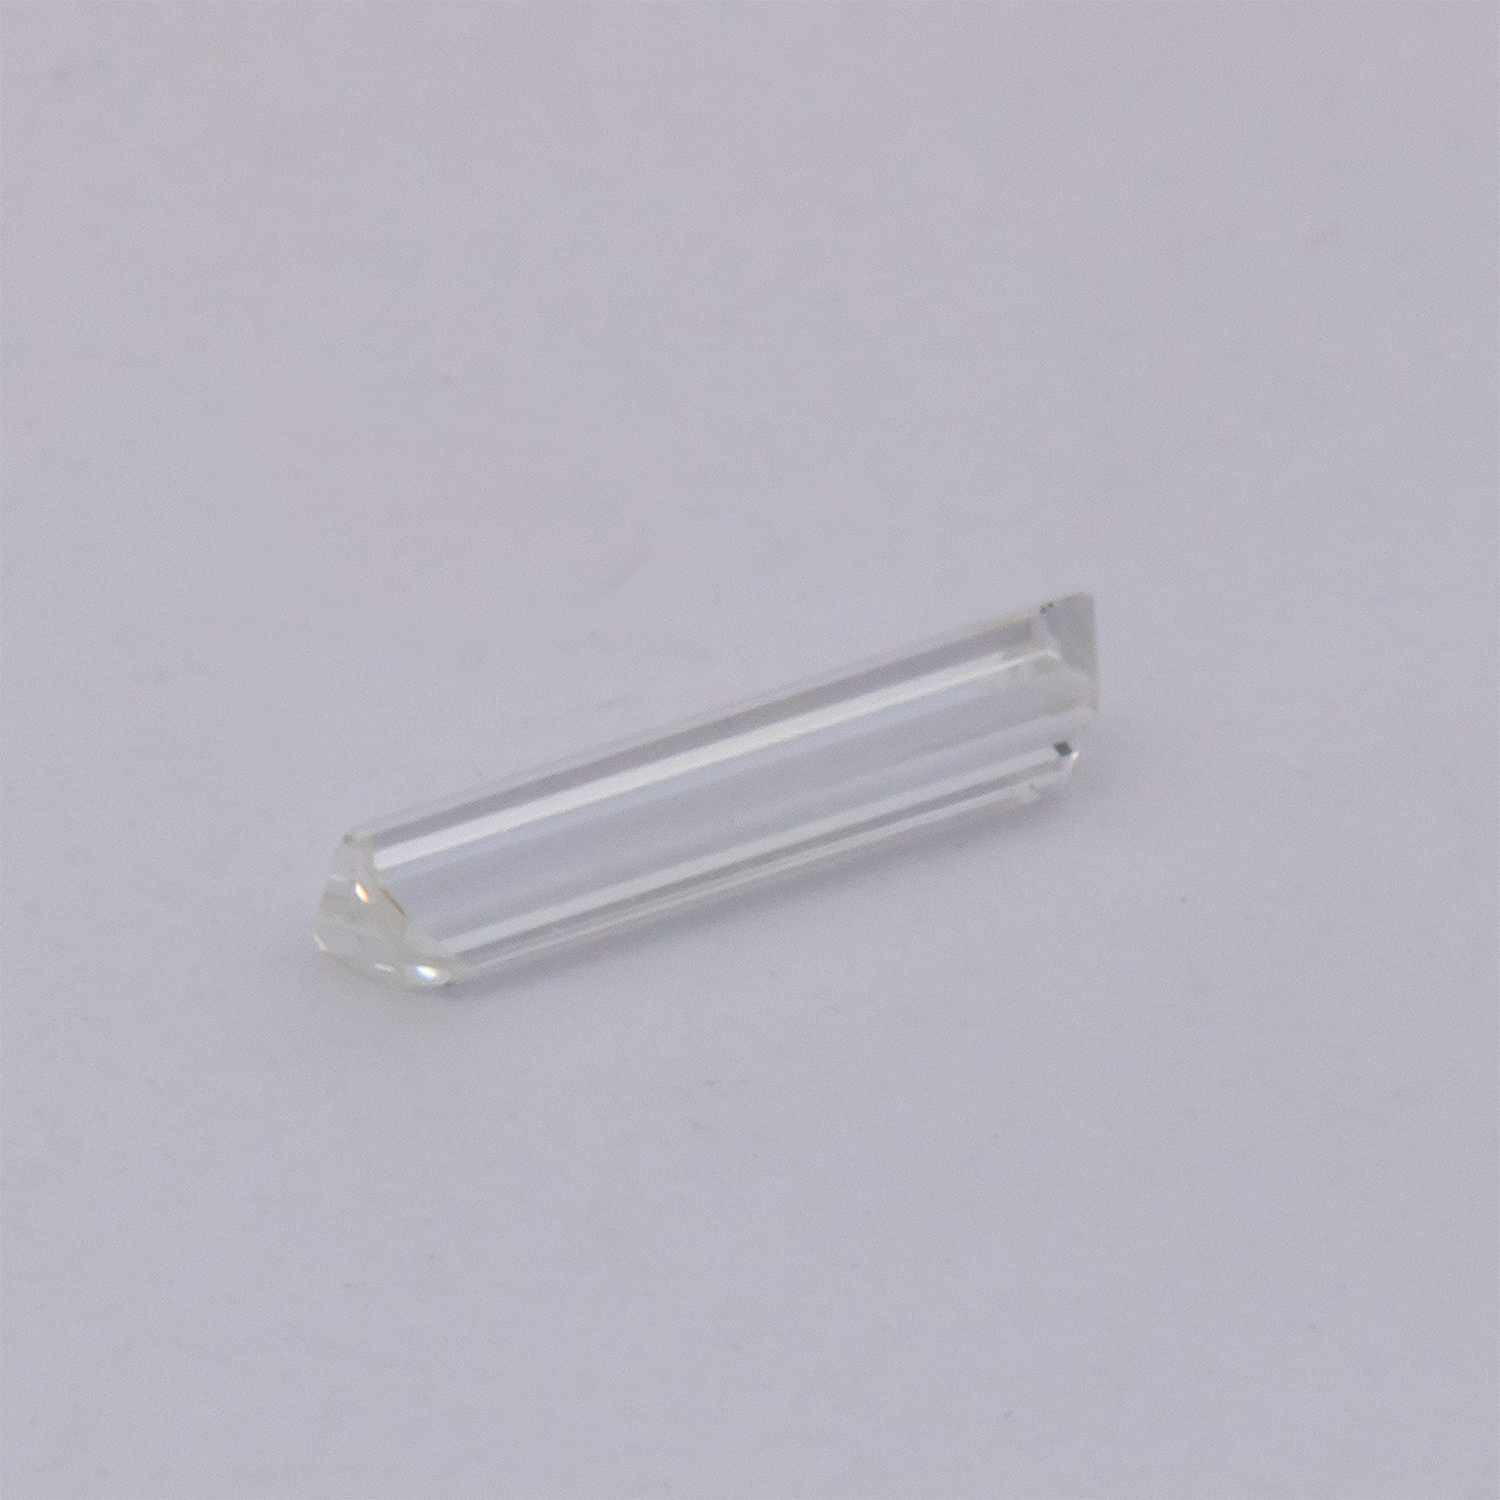 Diamant - fein weiß, baguette, 5.2x1.8 mm, 0.06 - 0.07 cts, Nr. DT1030